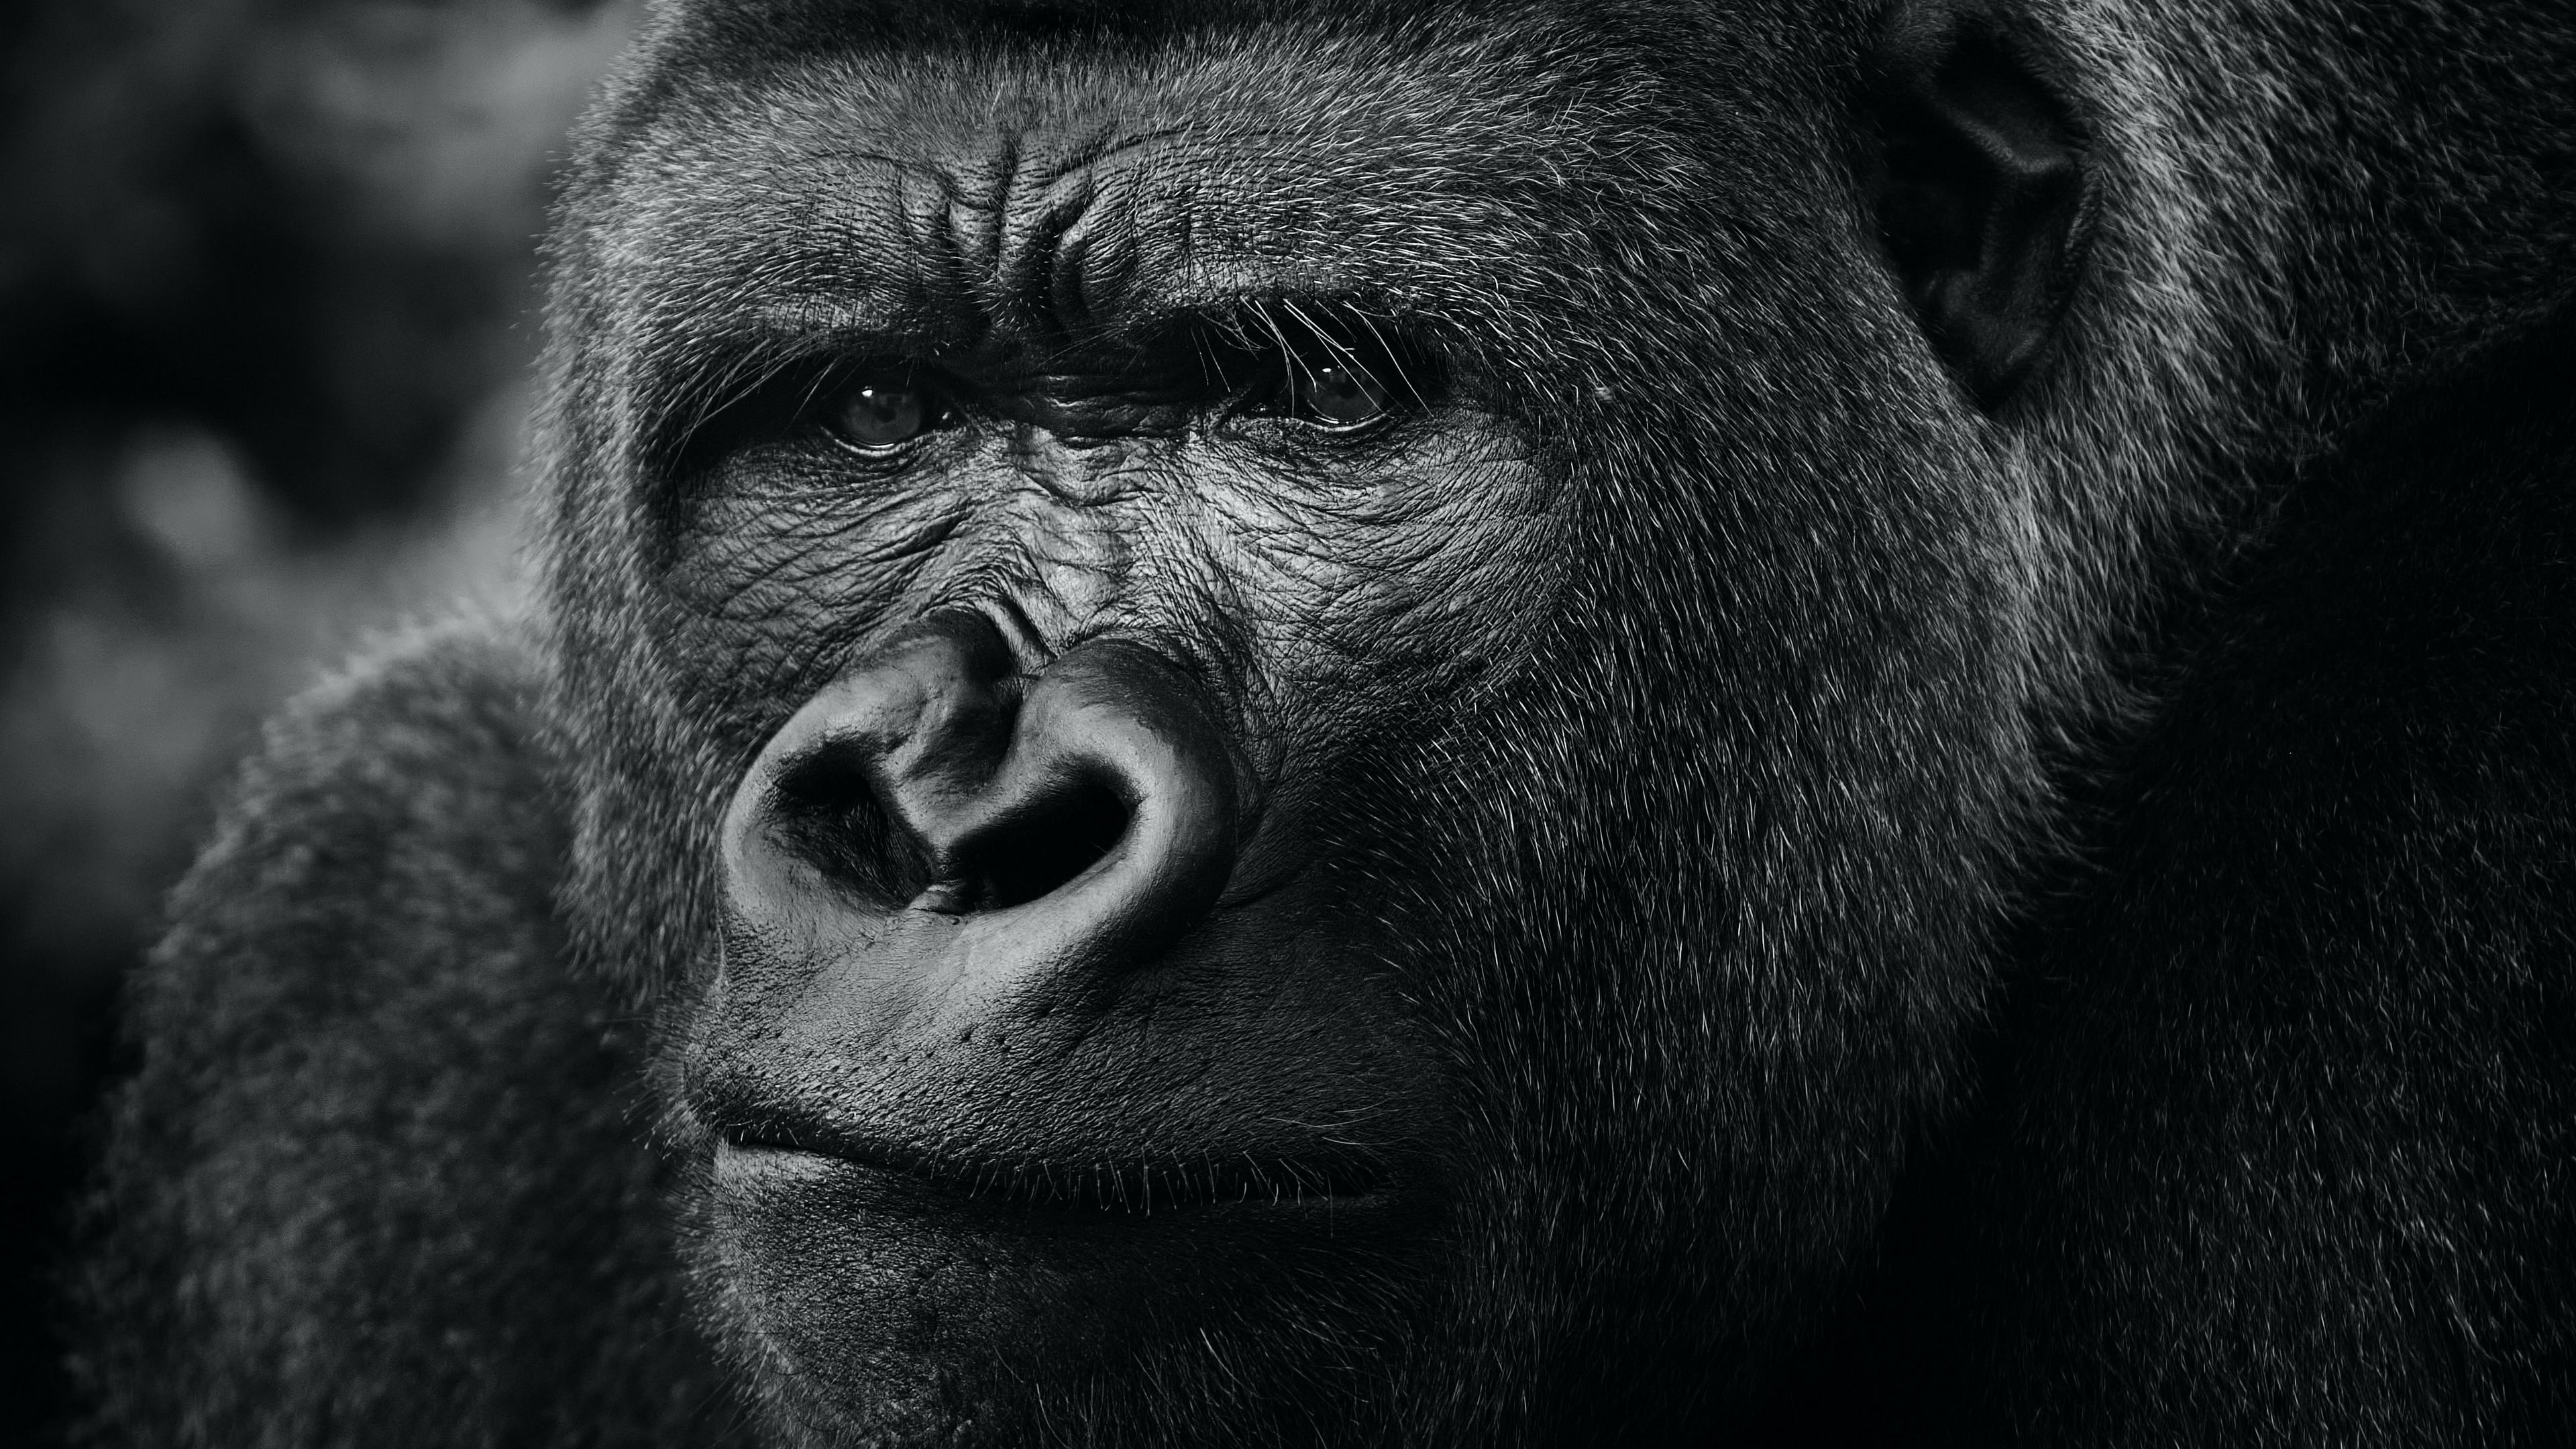 Anime gorilla, Unique artwork, Imaginative creation, Fictional world, 3840x2160 4K Desktop